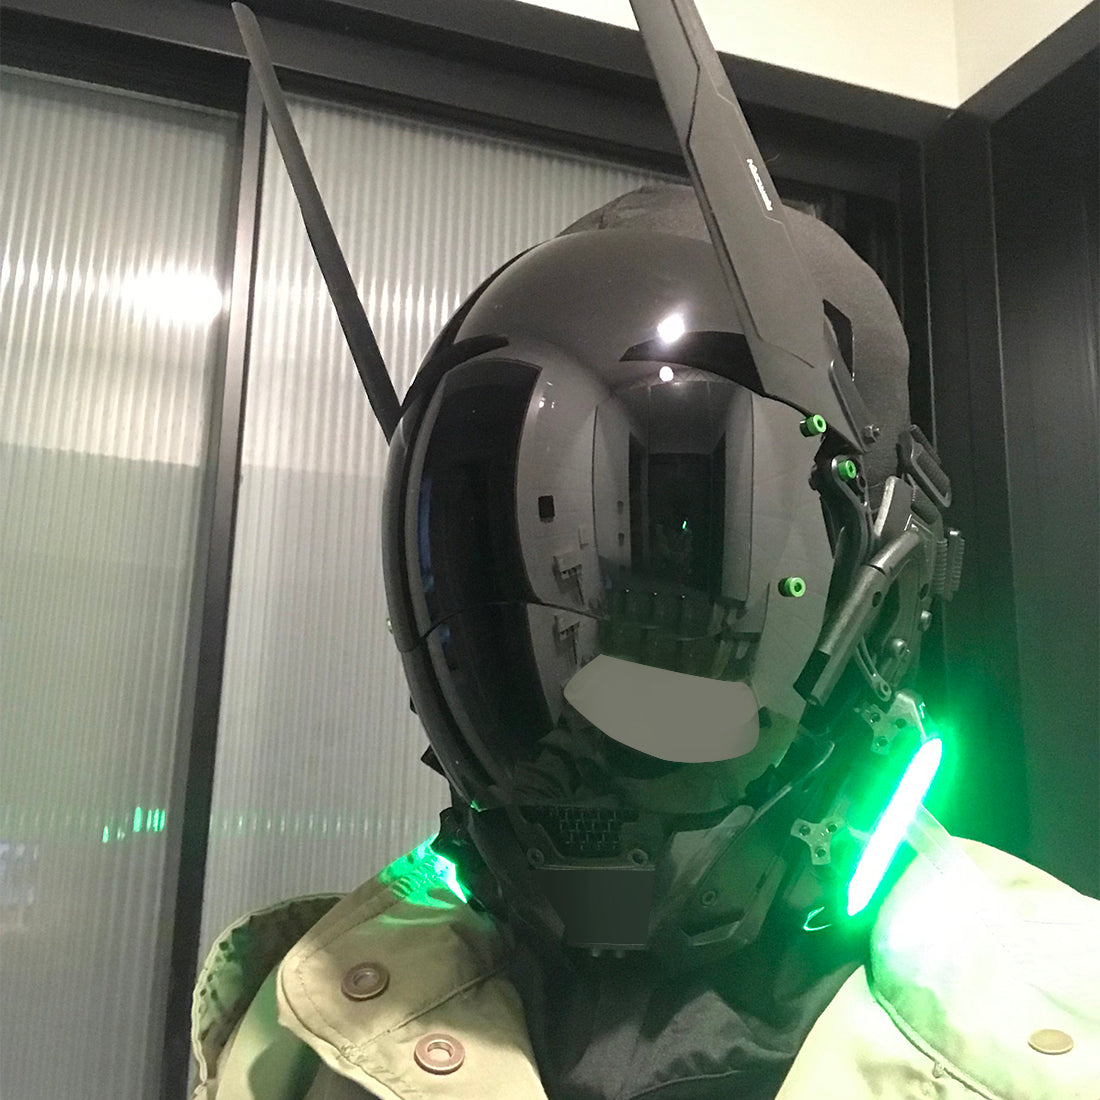 Future Punk Tech Helmet Mask with Propeller Light Cosplay